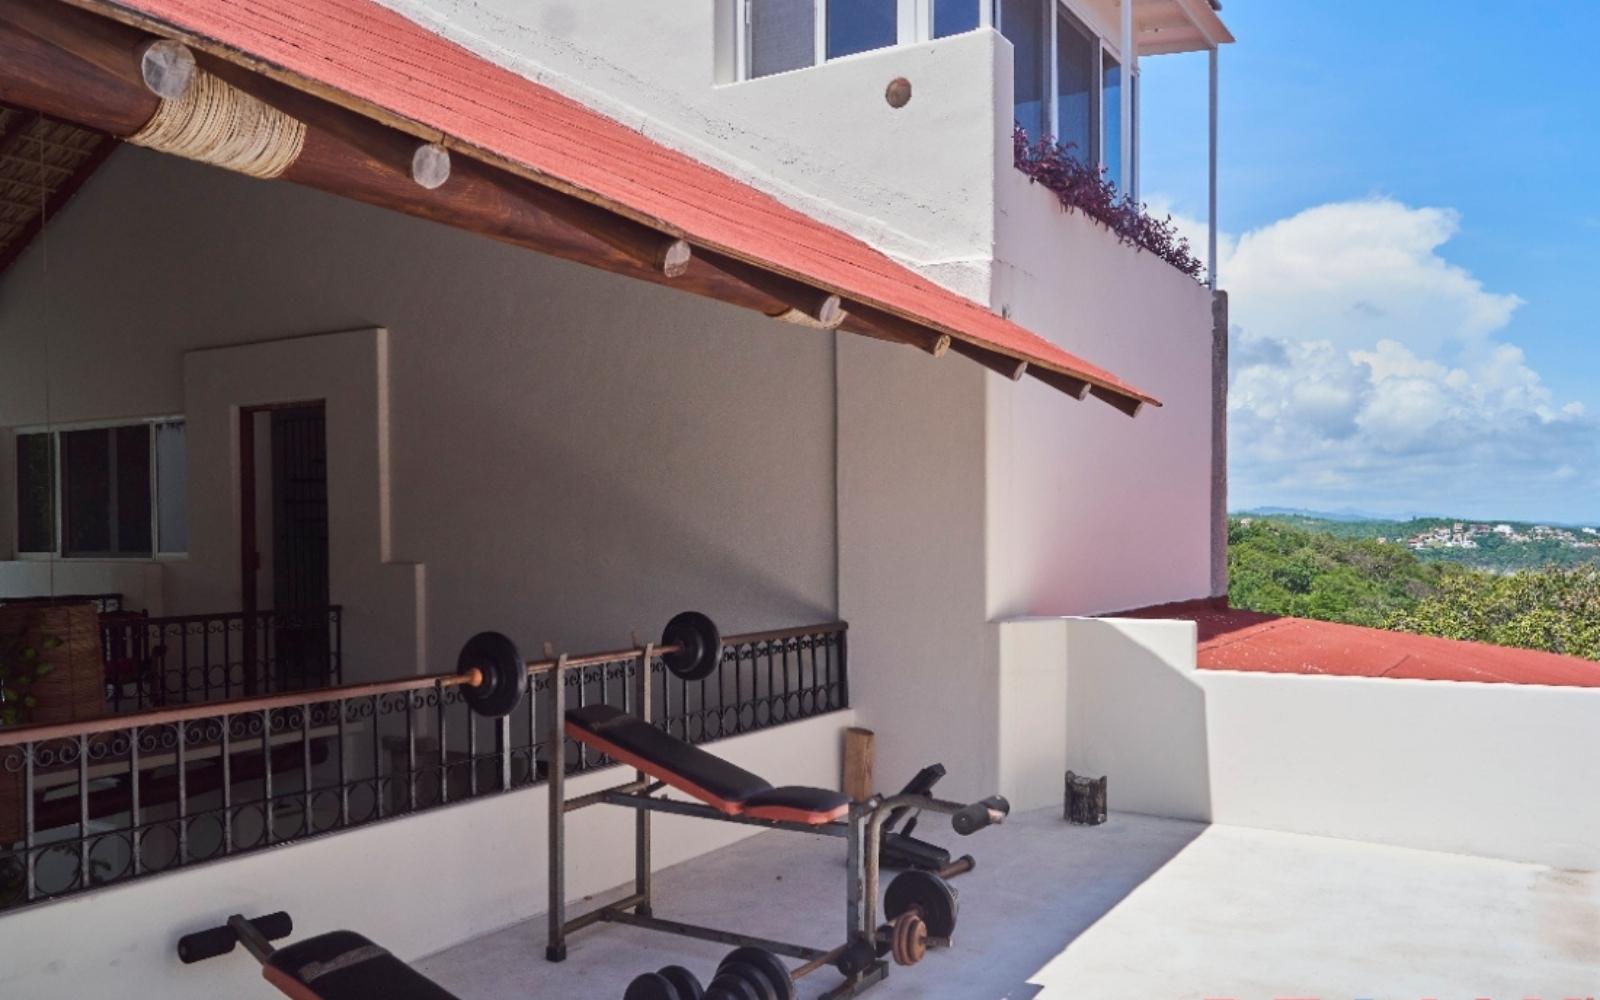 Luxury Beachfront villa, beach club and hotel services, private pool, elevator, in Tangolunda Bay Huatulco, for sale.